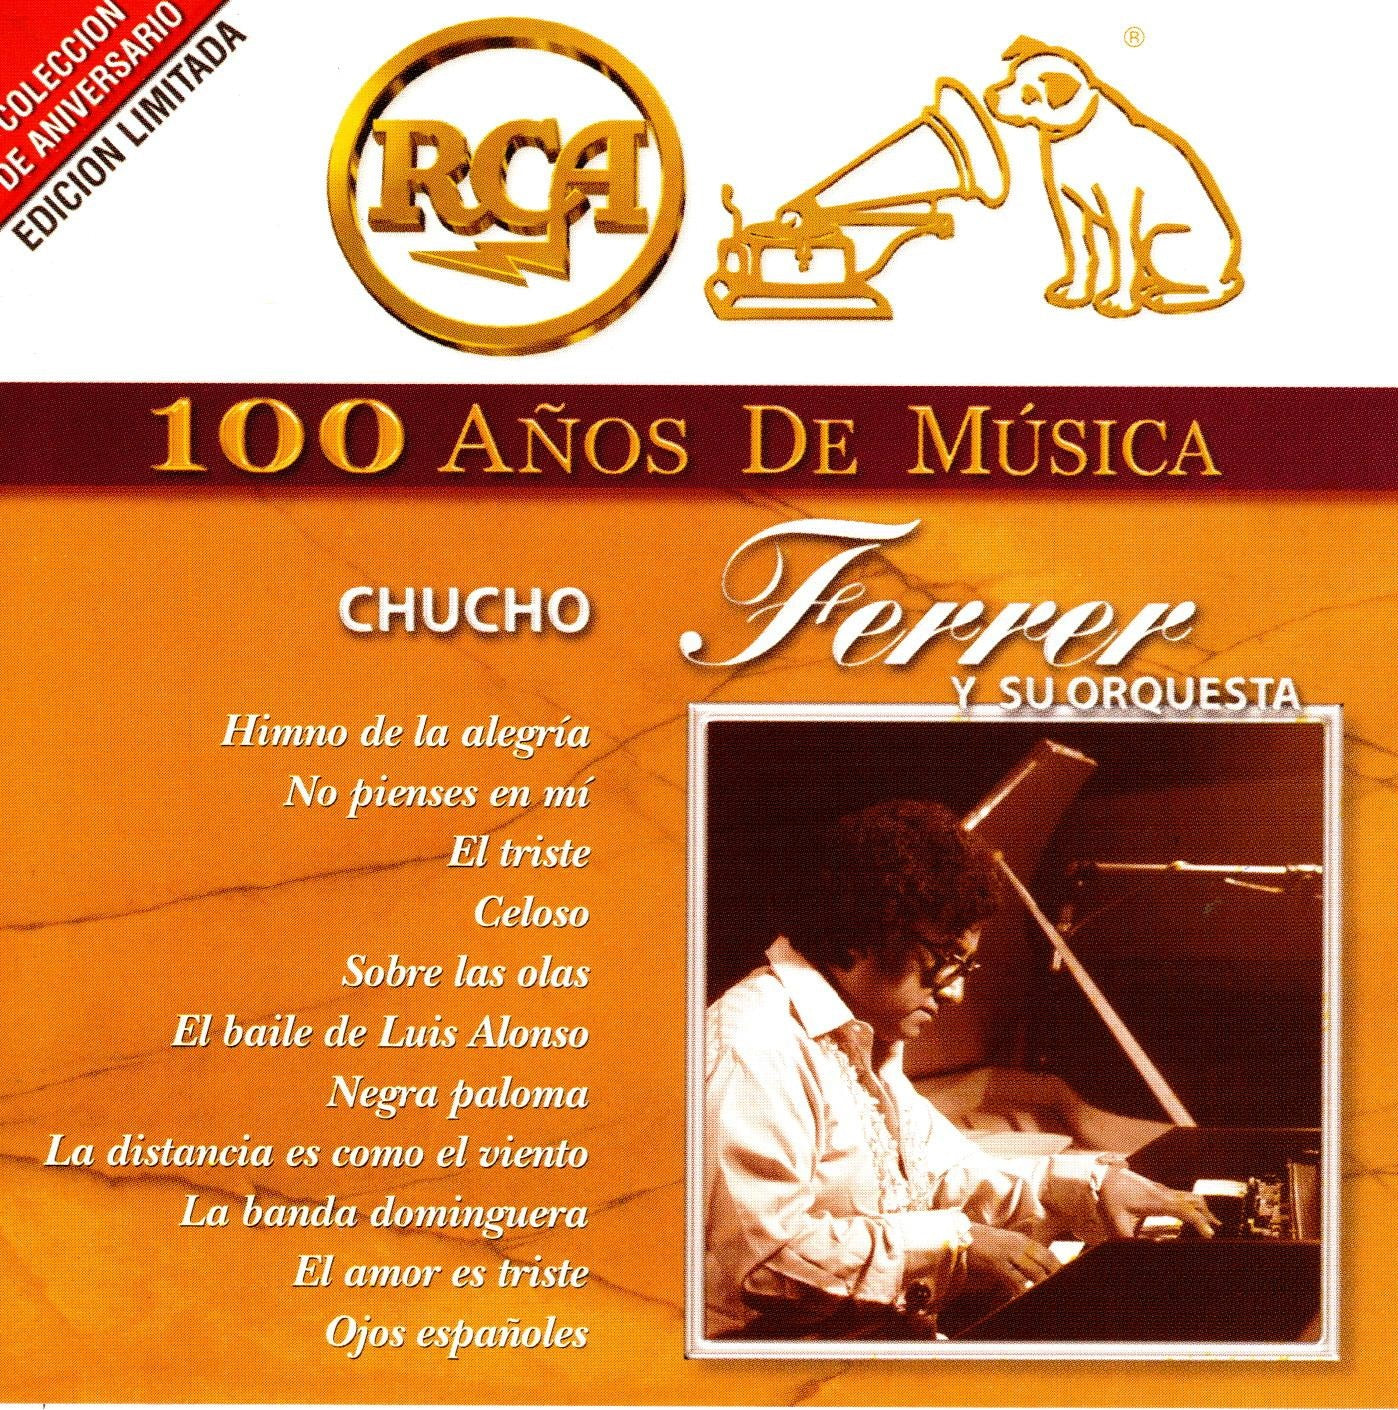 CD x2 RCA 100 AÑOS MUSICA CHUCHO FER